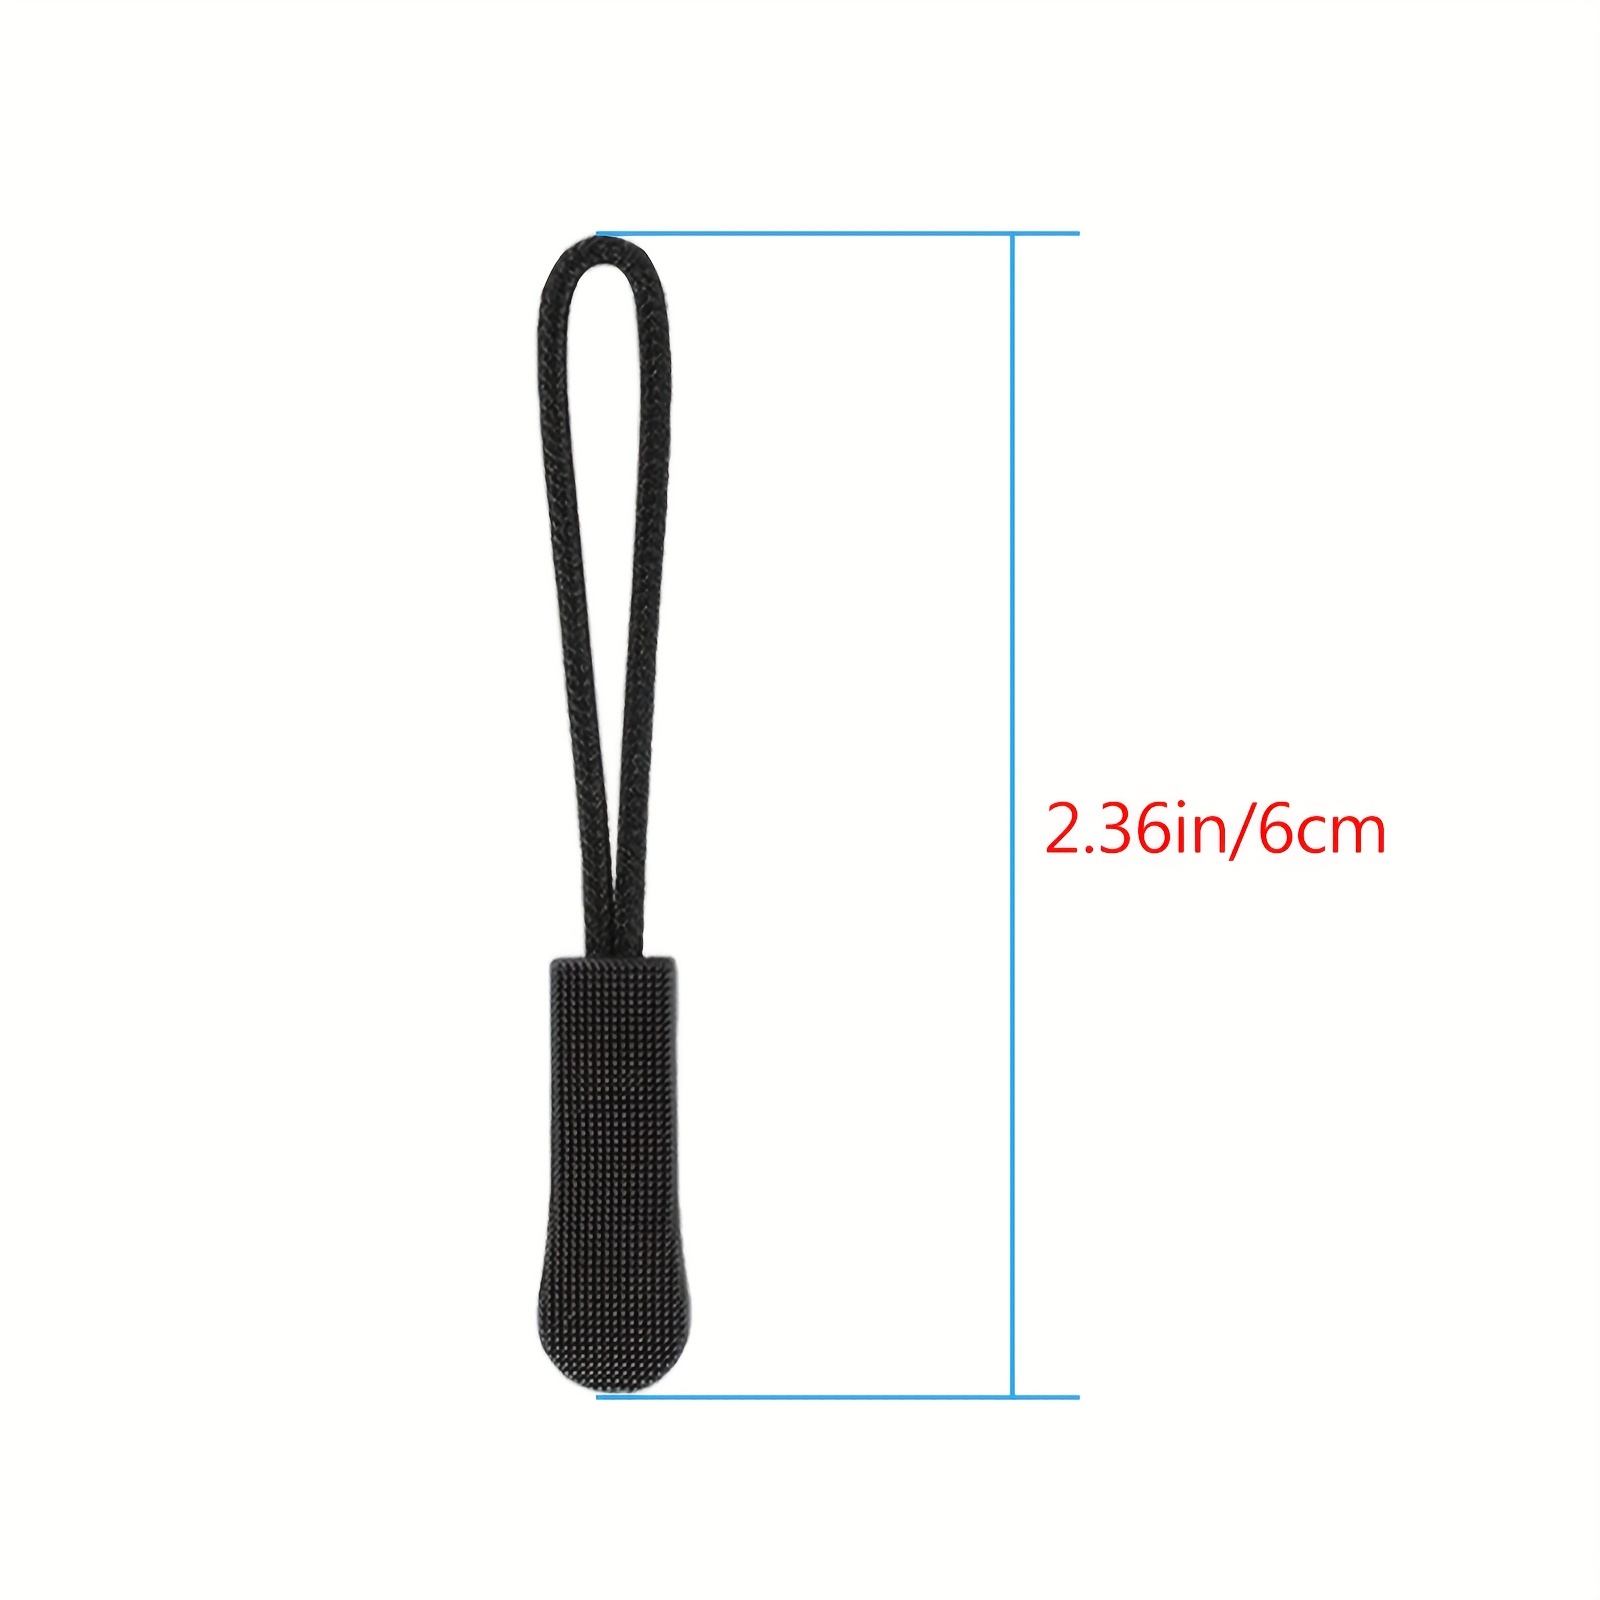 YZSFIRM Luggage Zipper Pull Replacement: 10Pcs Black Zipper Tab - Metal  Zipper Extension Handle - Detachable Small Hole Zipper Pulls Tags